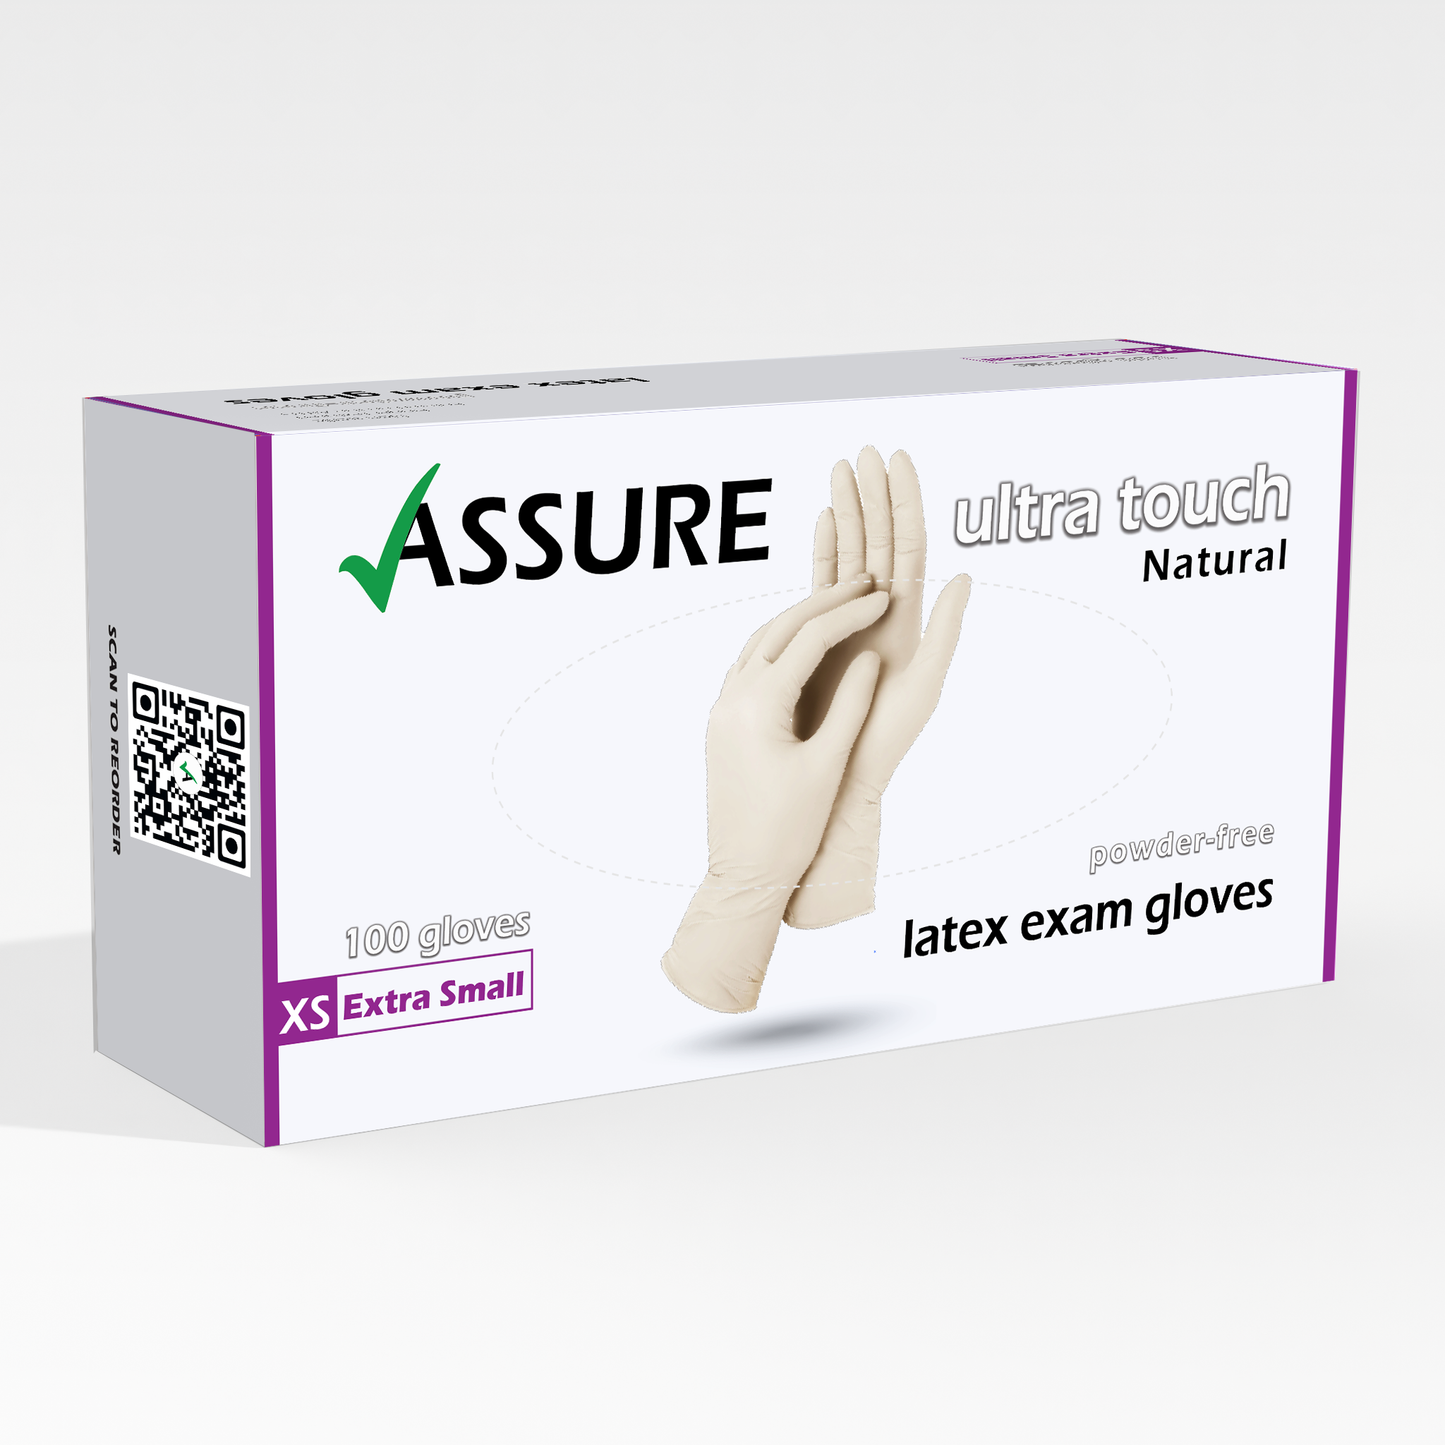 ASSURE Latex Gloves $5.50 per box of 100, 10 boxes per carton